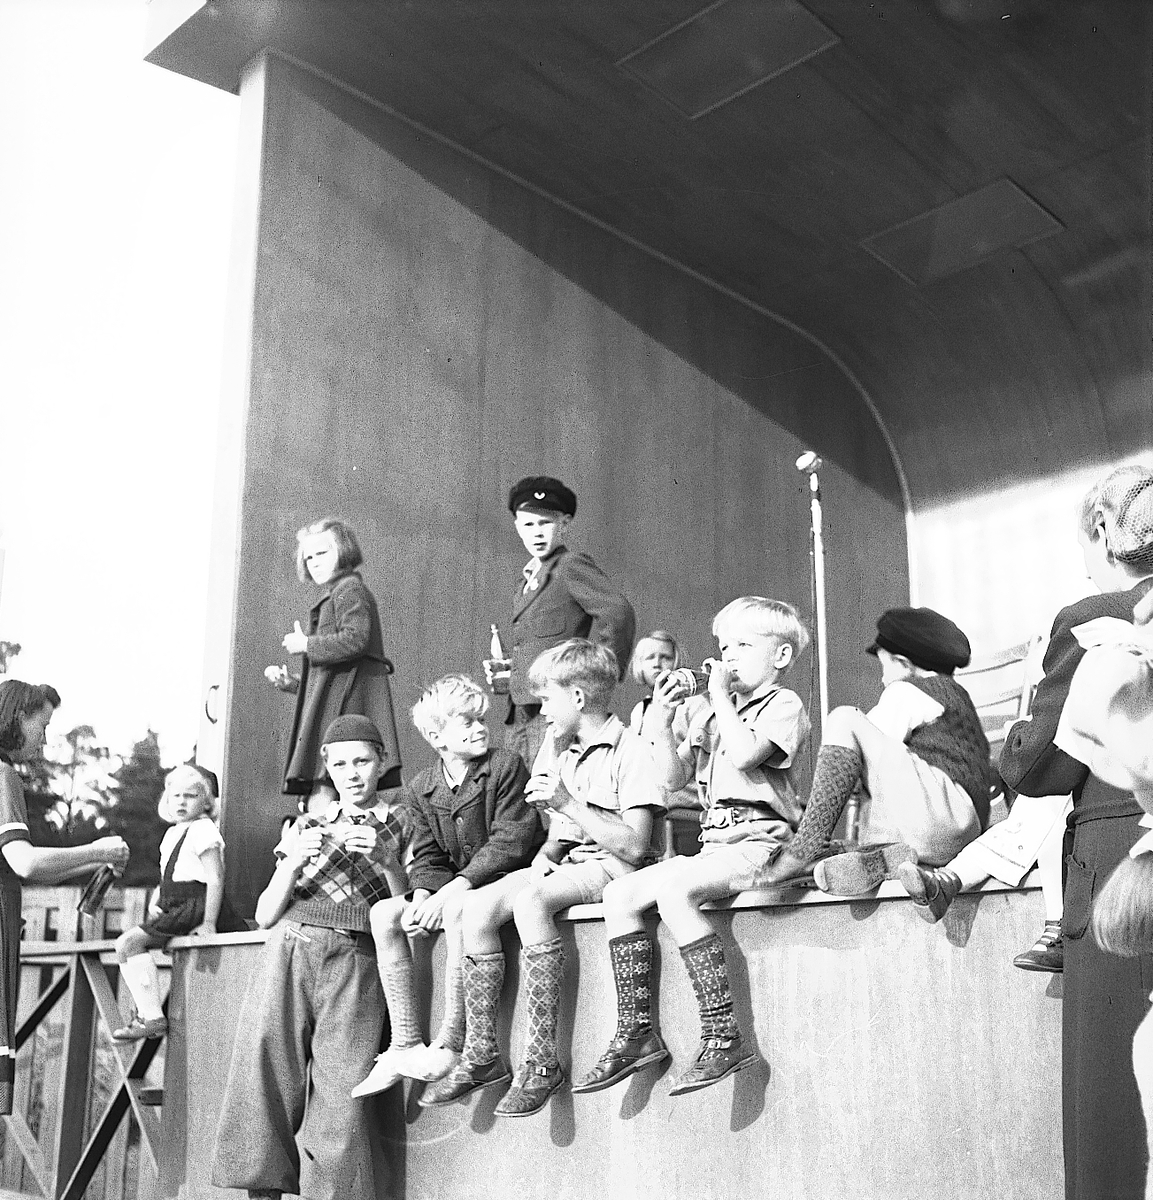 Konsum Alfa. Festen i Folkparken, den 25 Augusti 1943.

